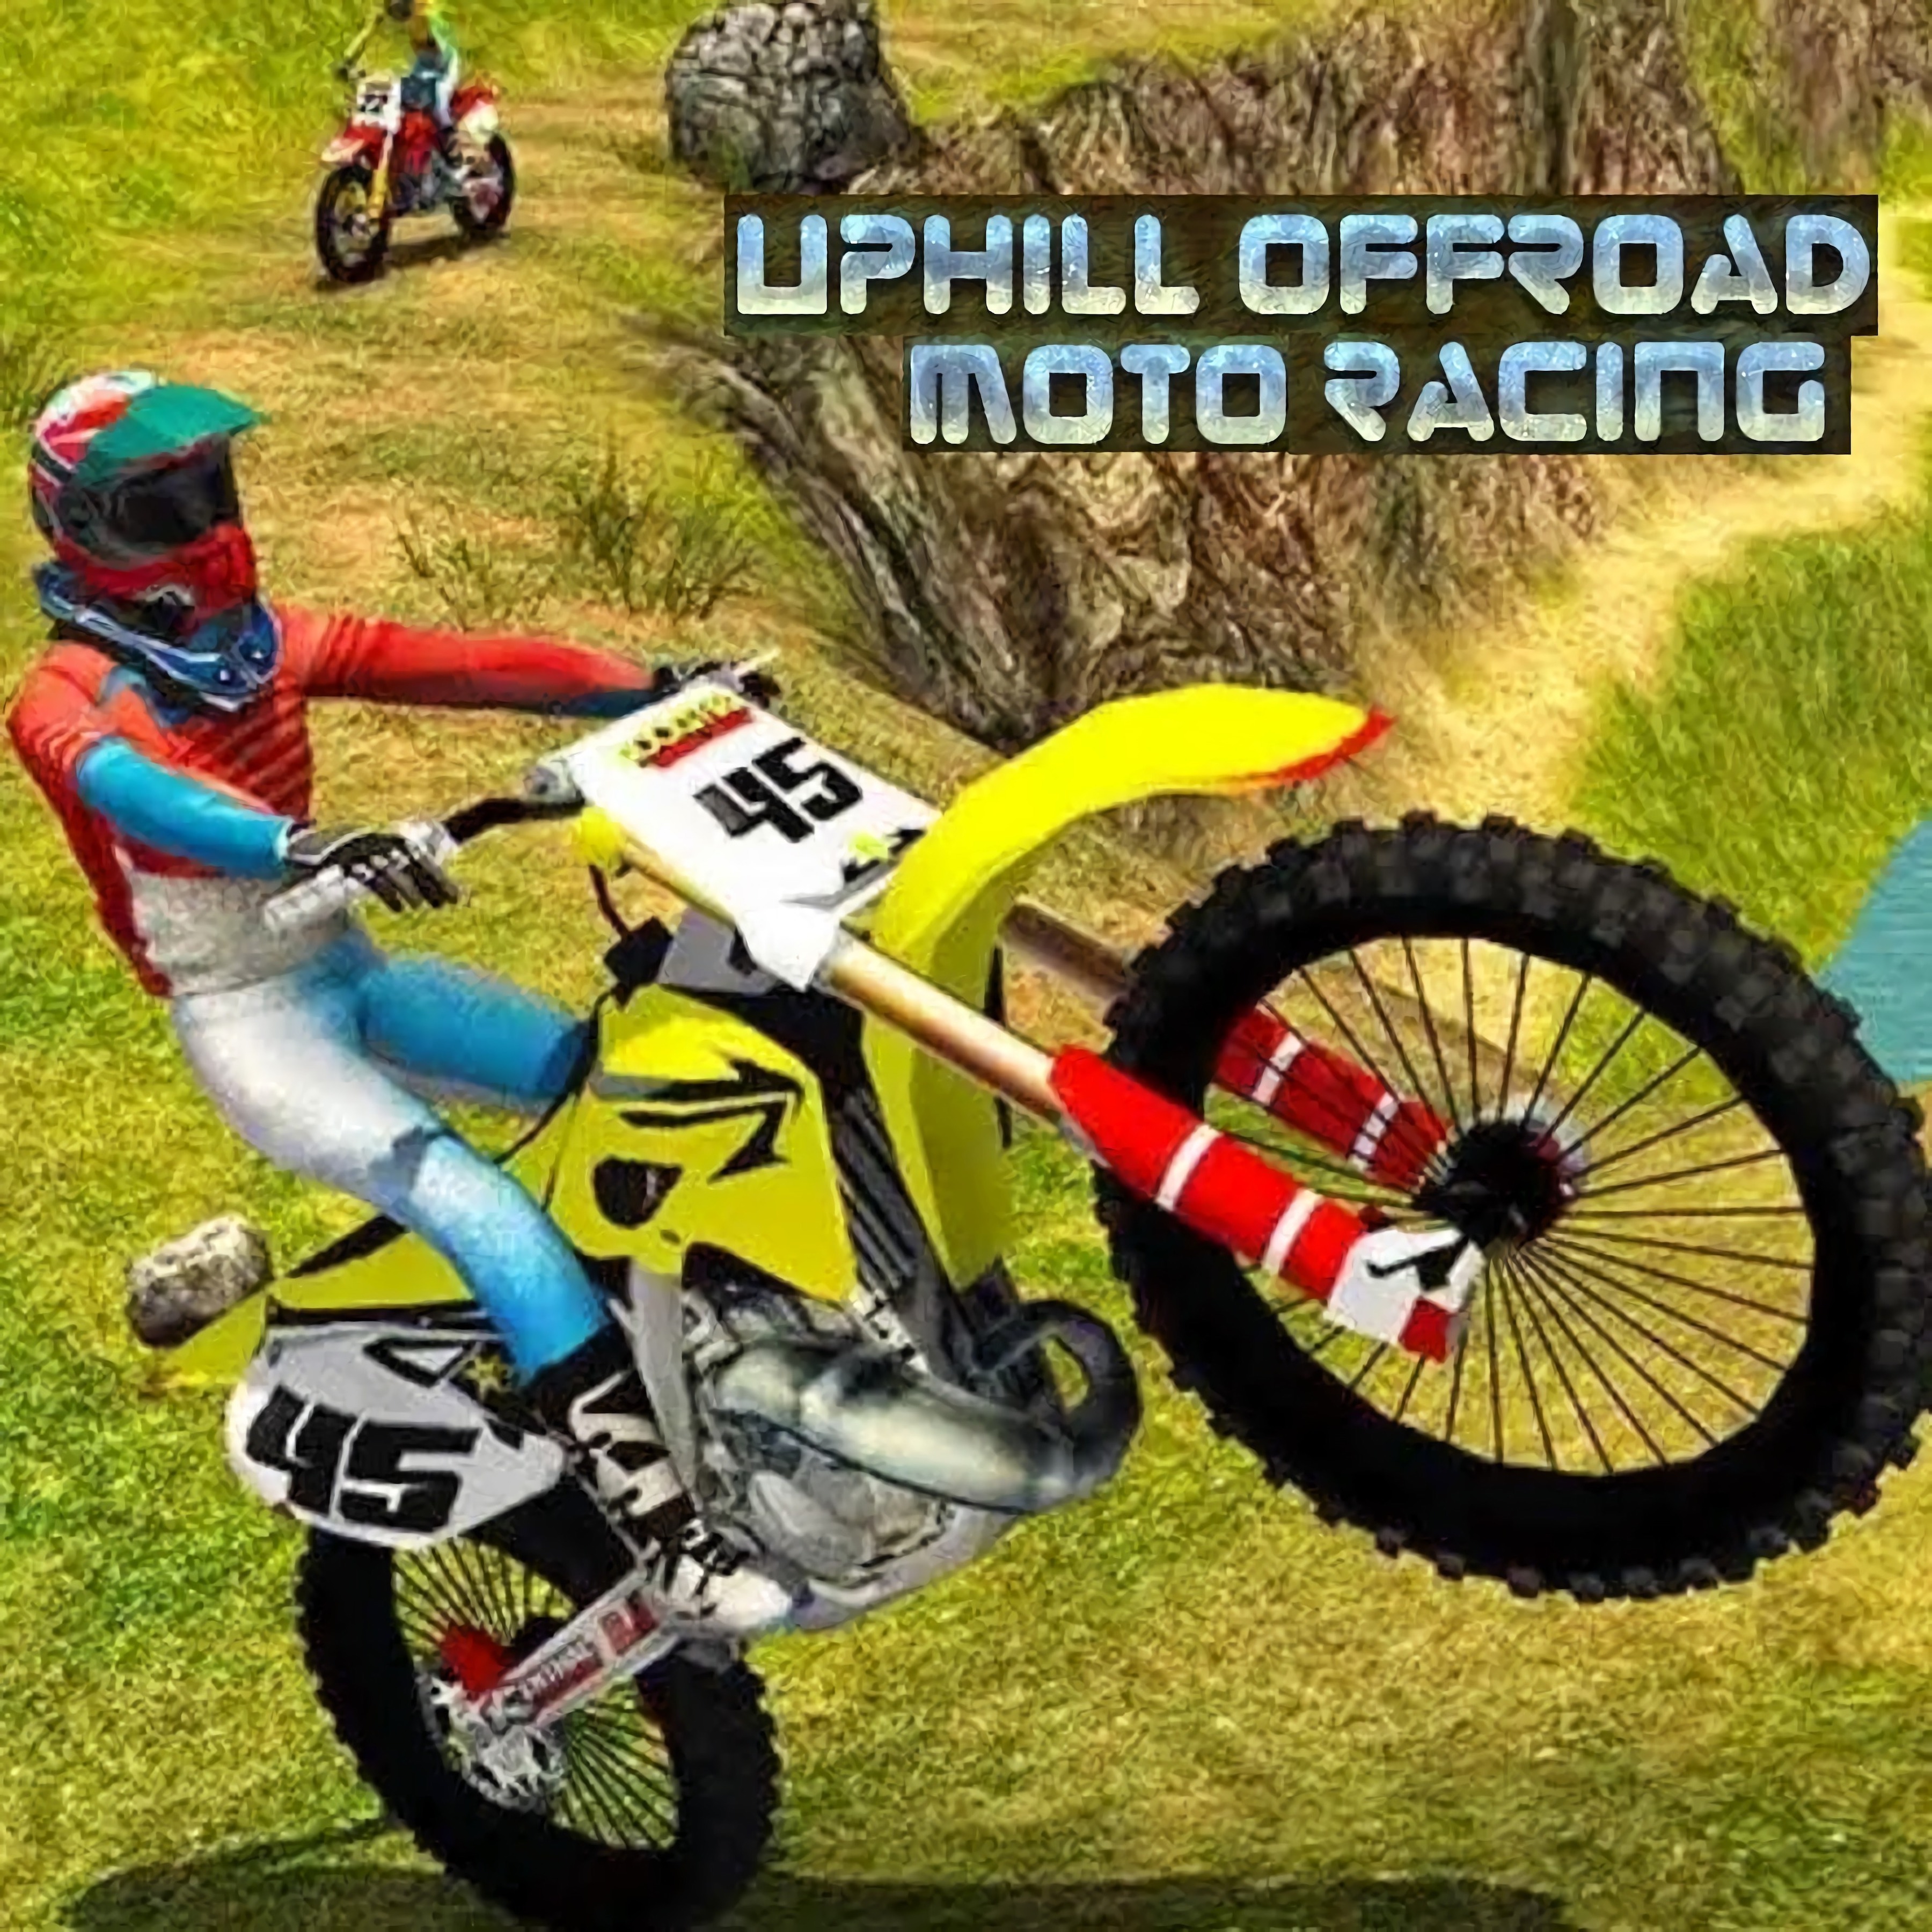 Uphill Offroad Moto Racing